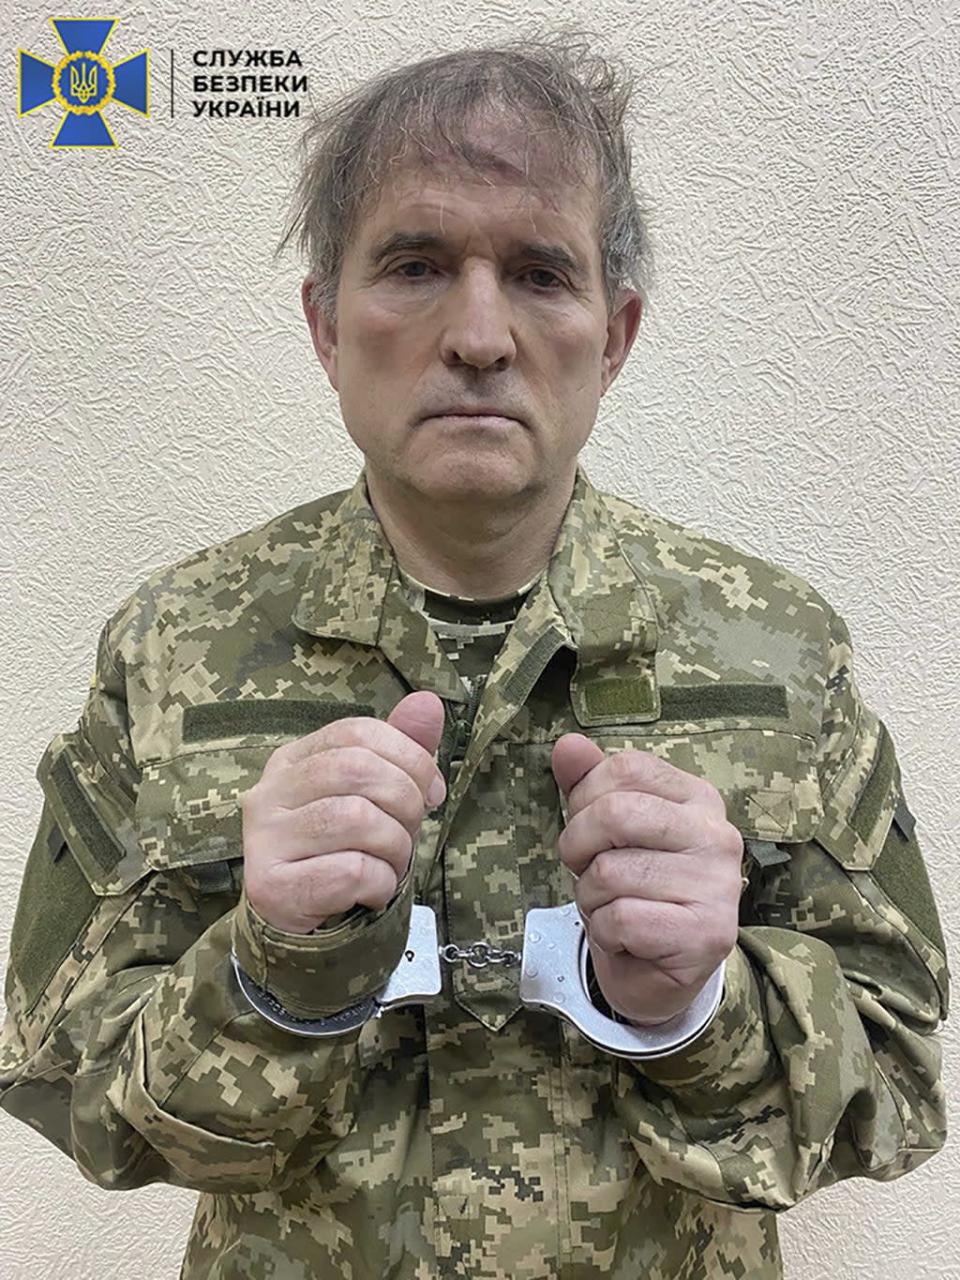 Medvedchuk was seen in handcuffs (Security Service of Ukraine/AFP)